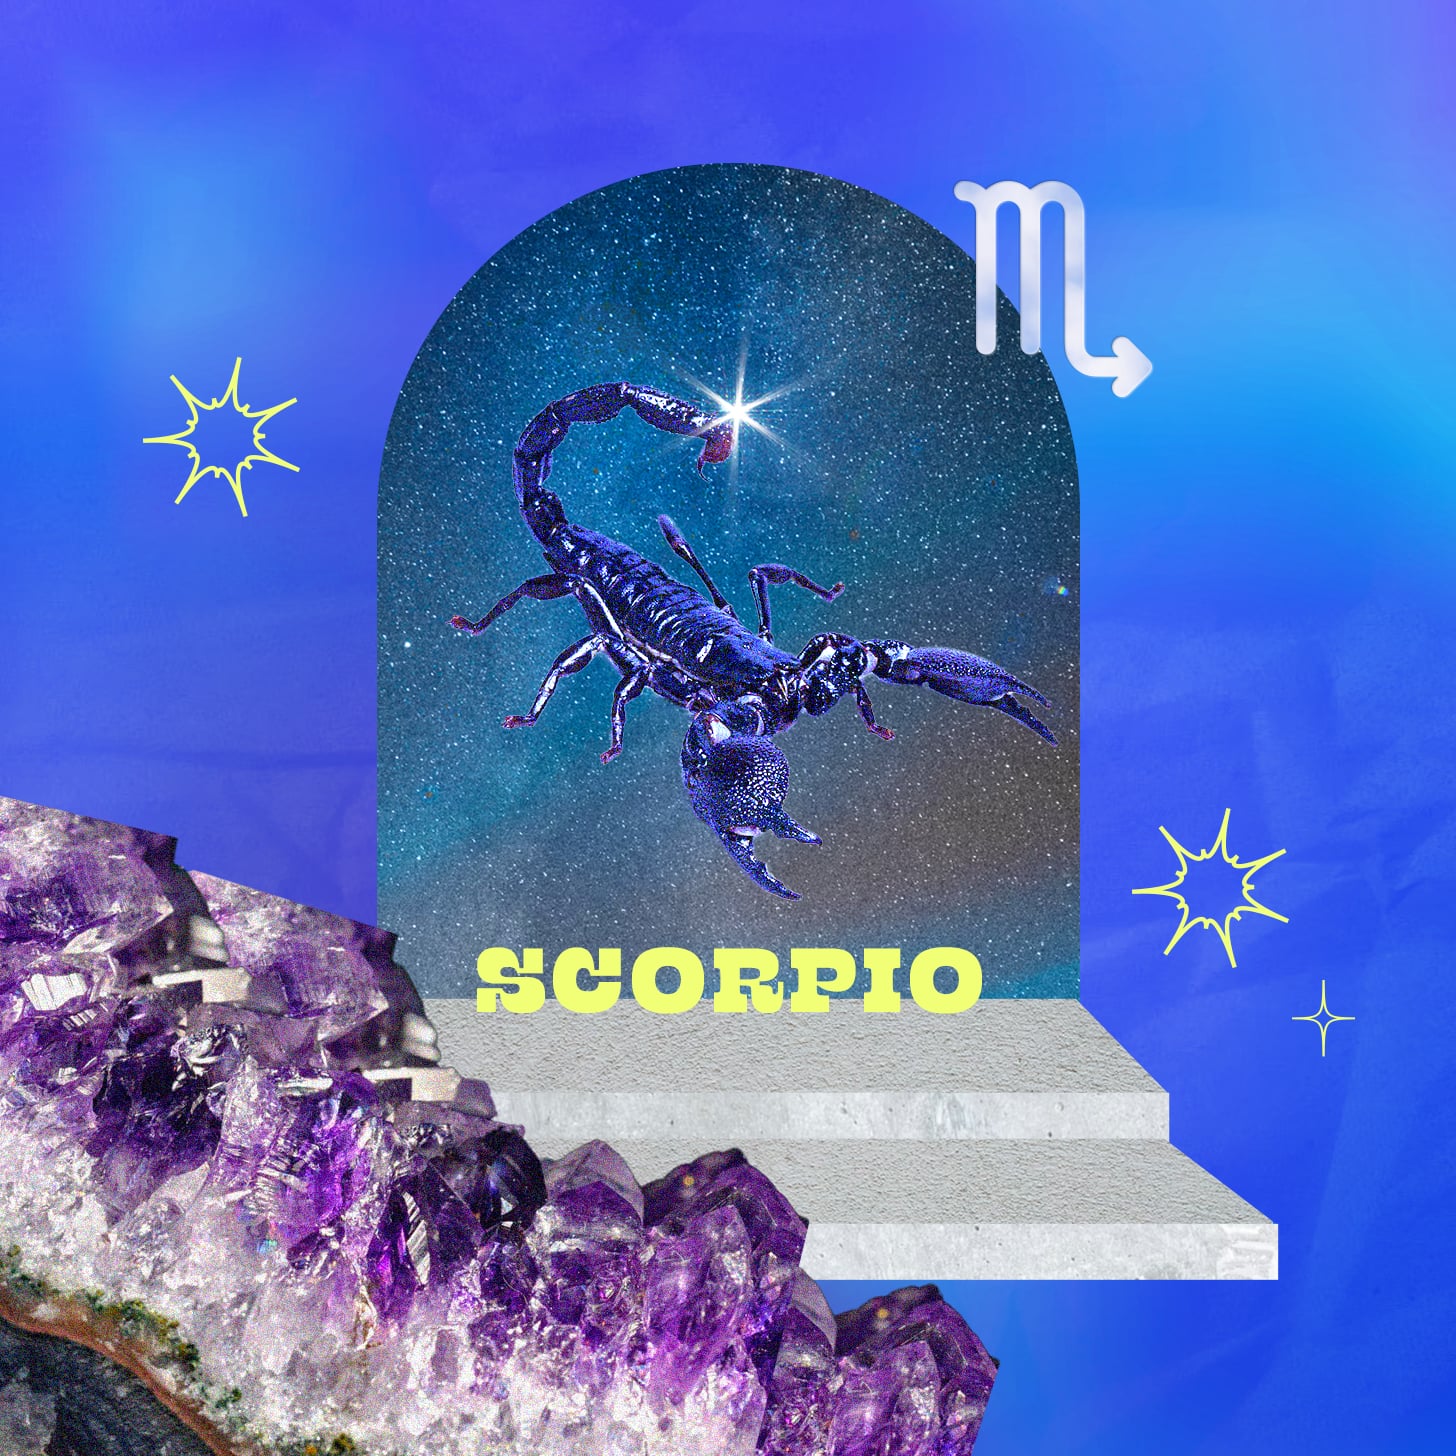 Scorpio weekly horoscope for December 18, 2022 